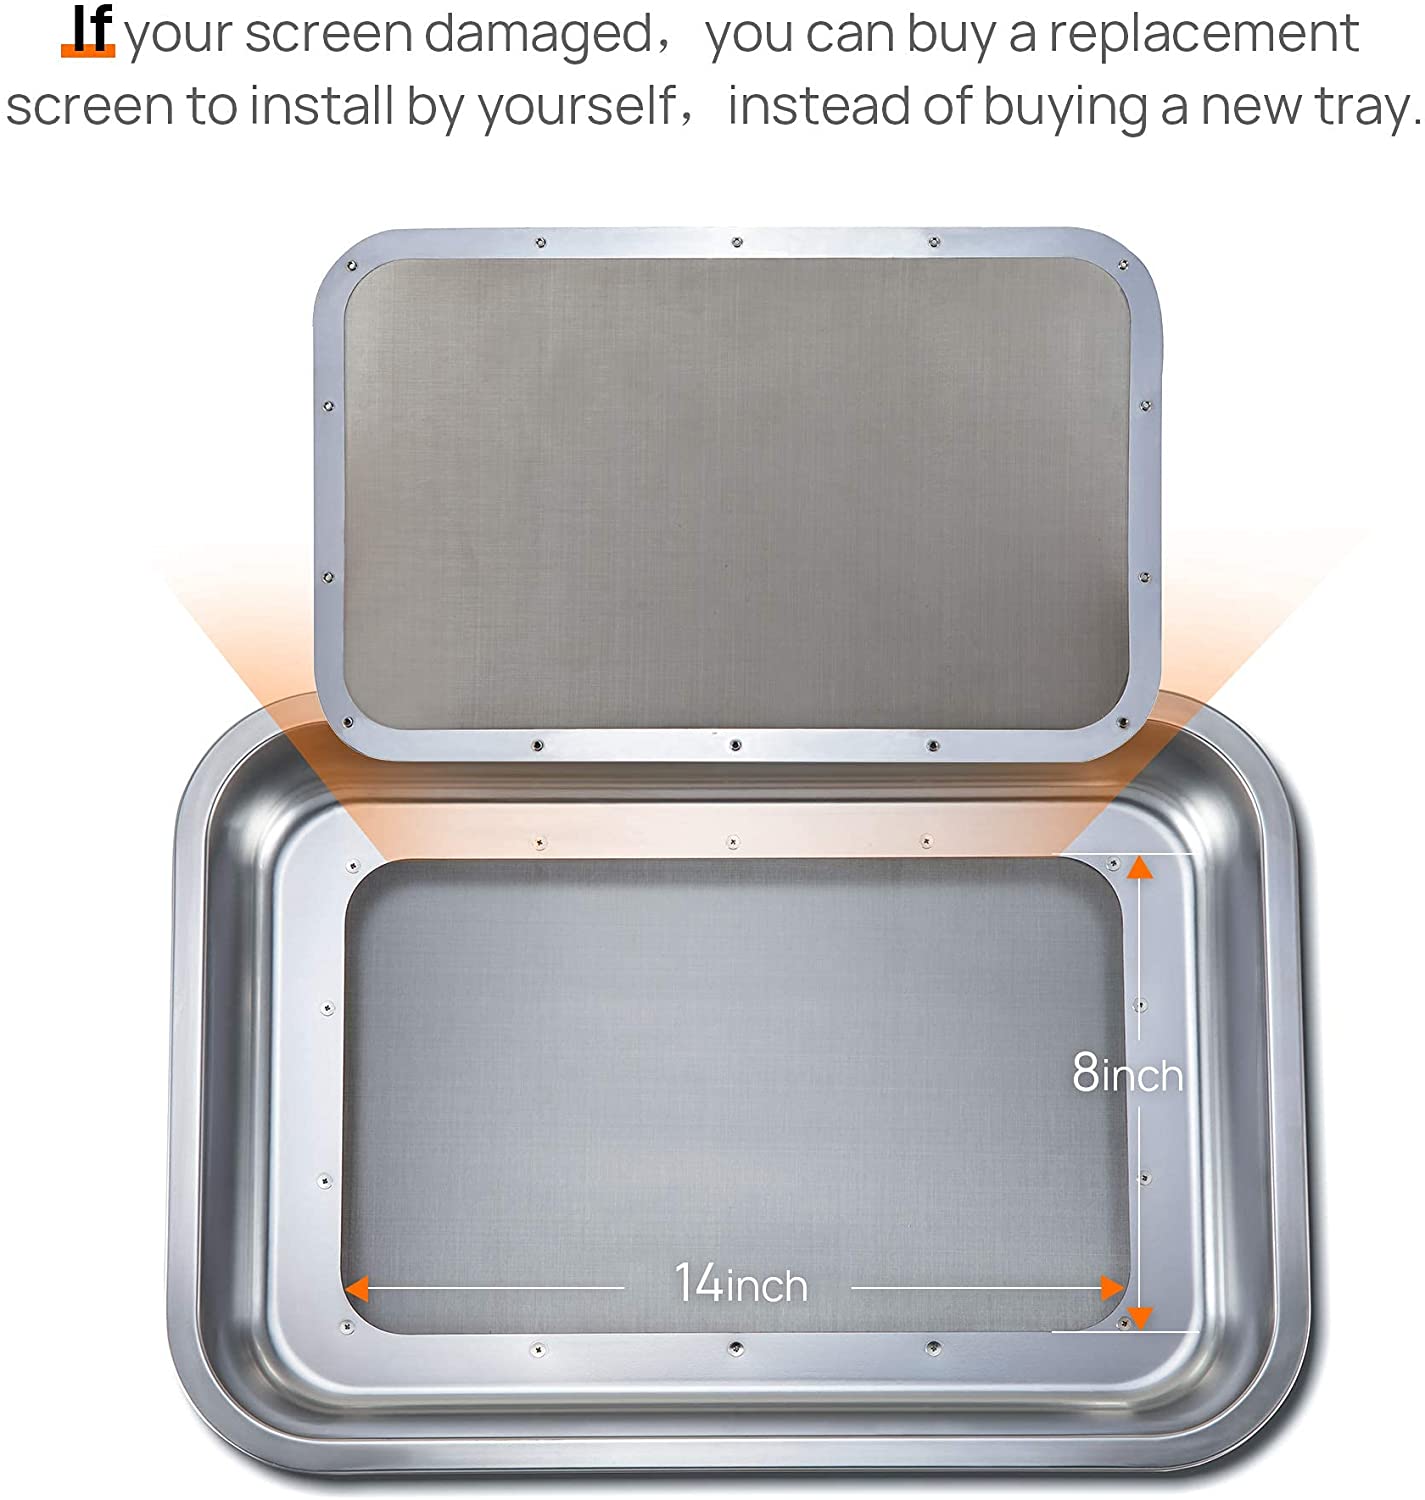 mogobe trim tray showing replacement screen